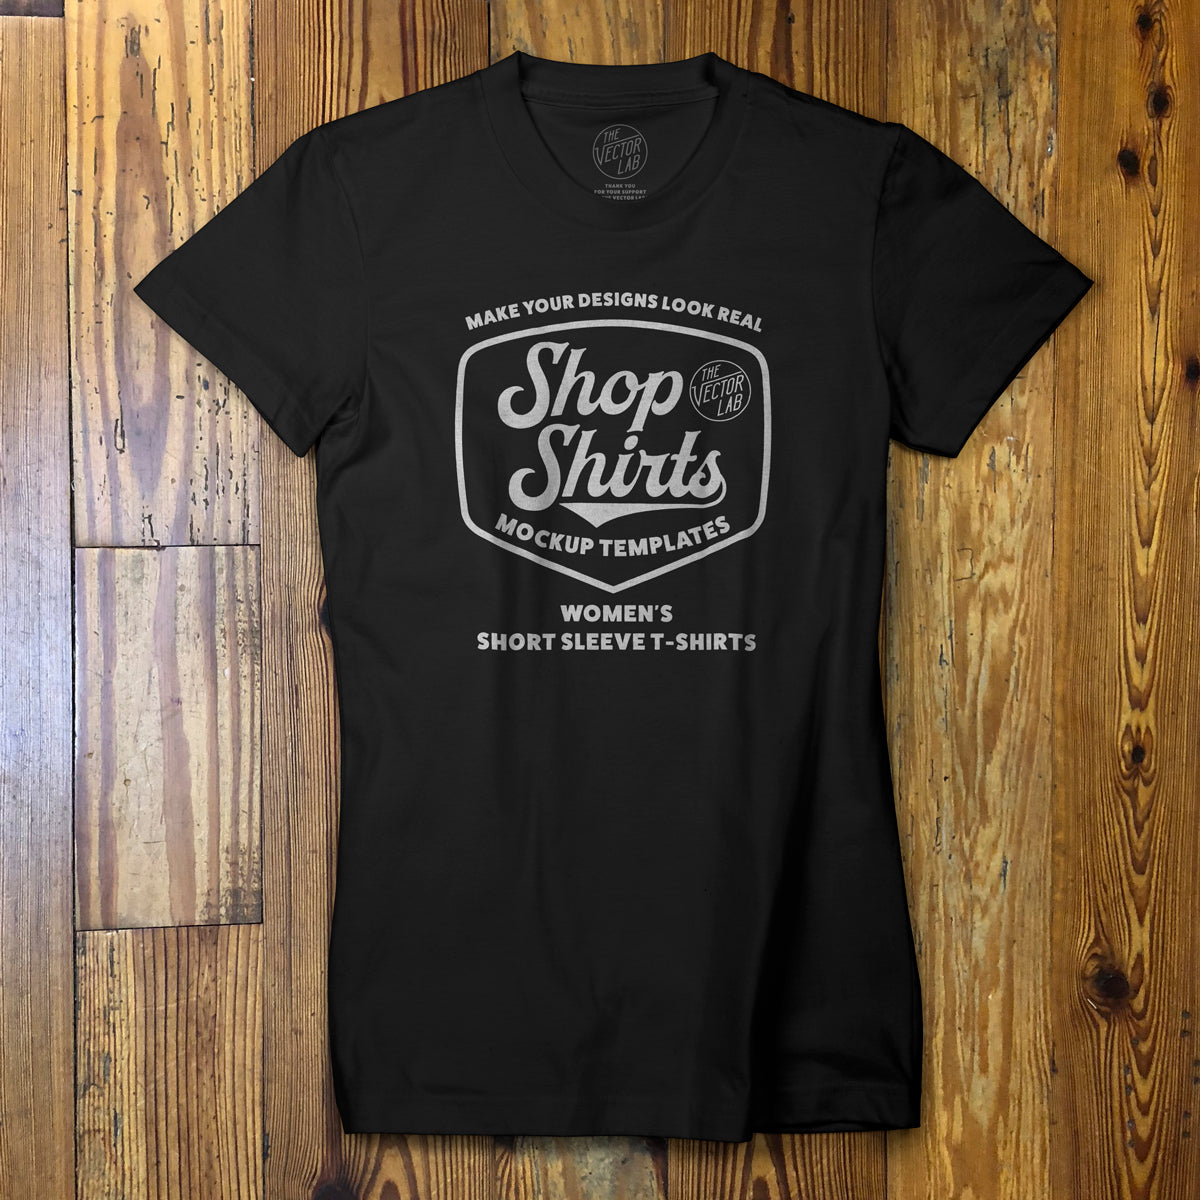 Download Shop Shirts: Women's T-Shirt Mockup Templates - TheVectorLab